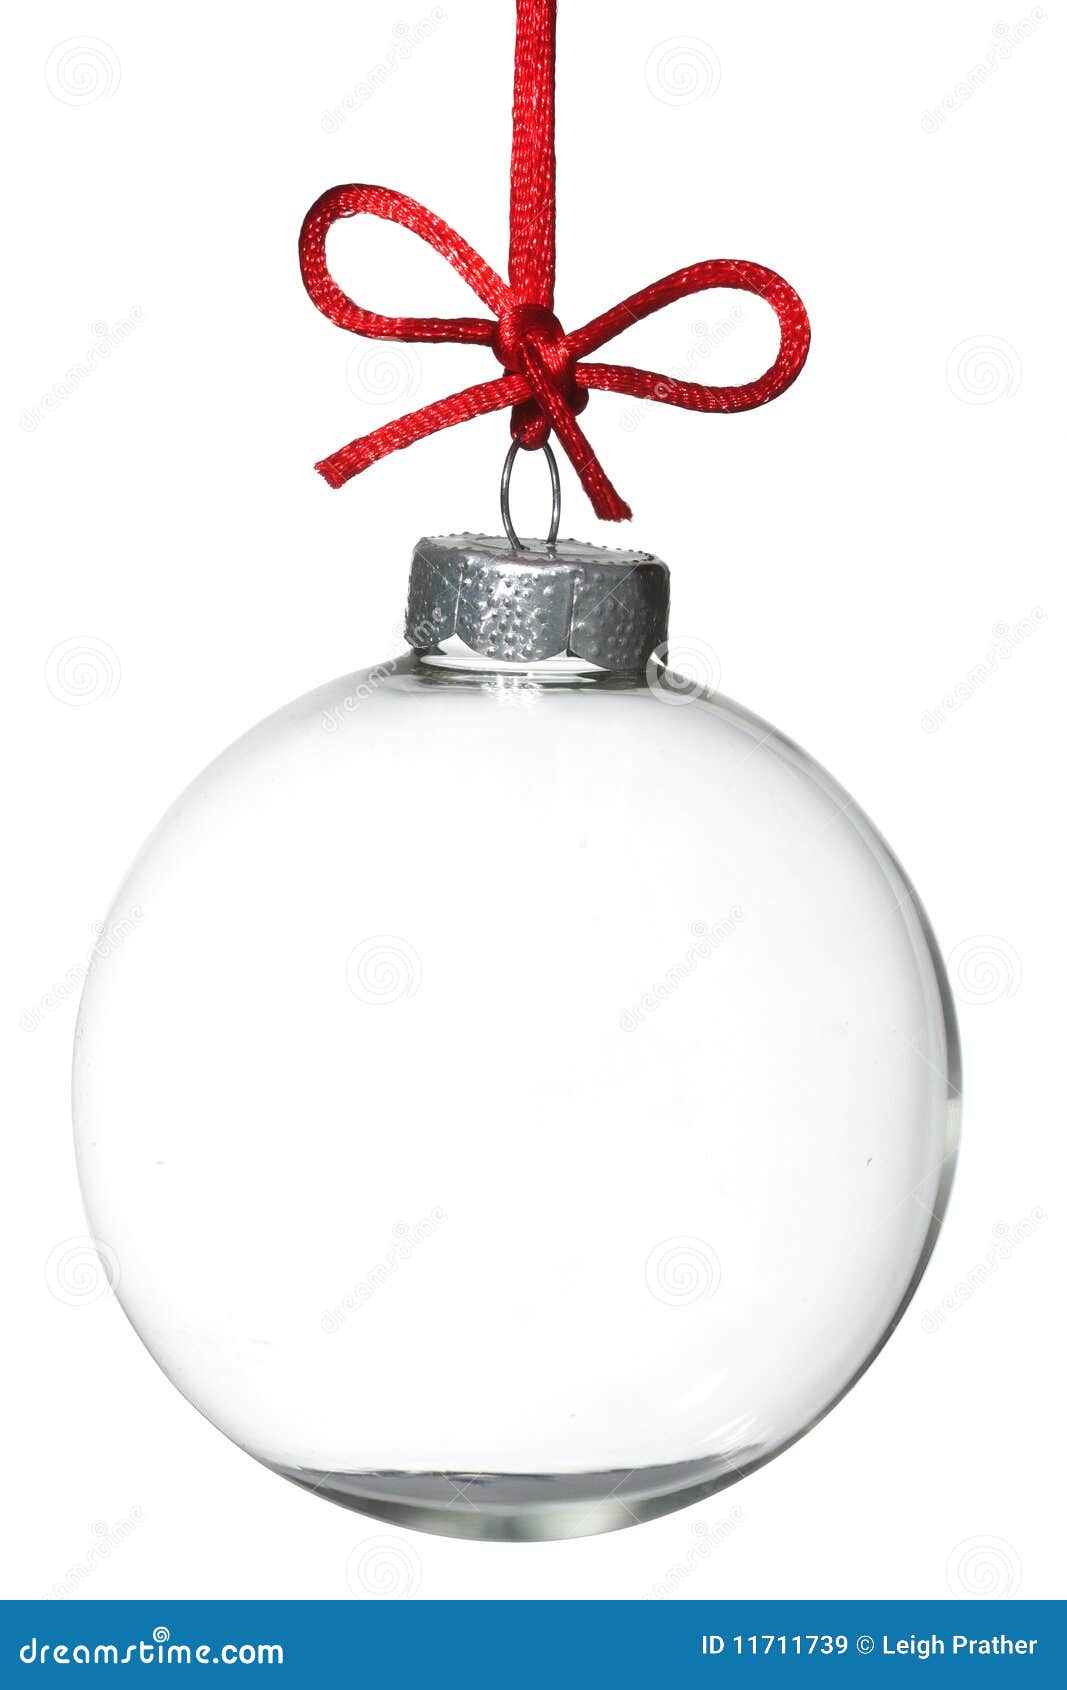 empty christmas ornament